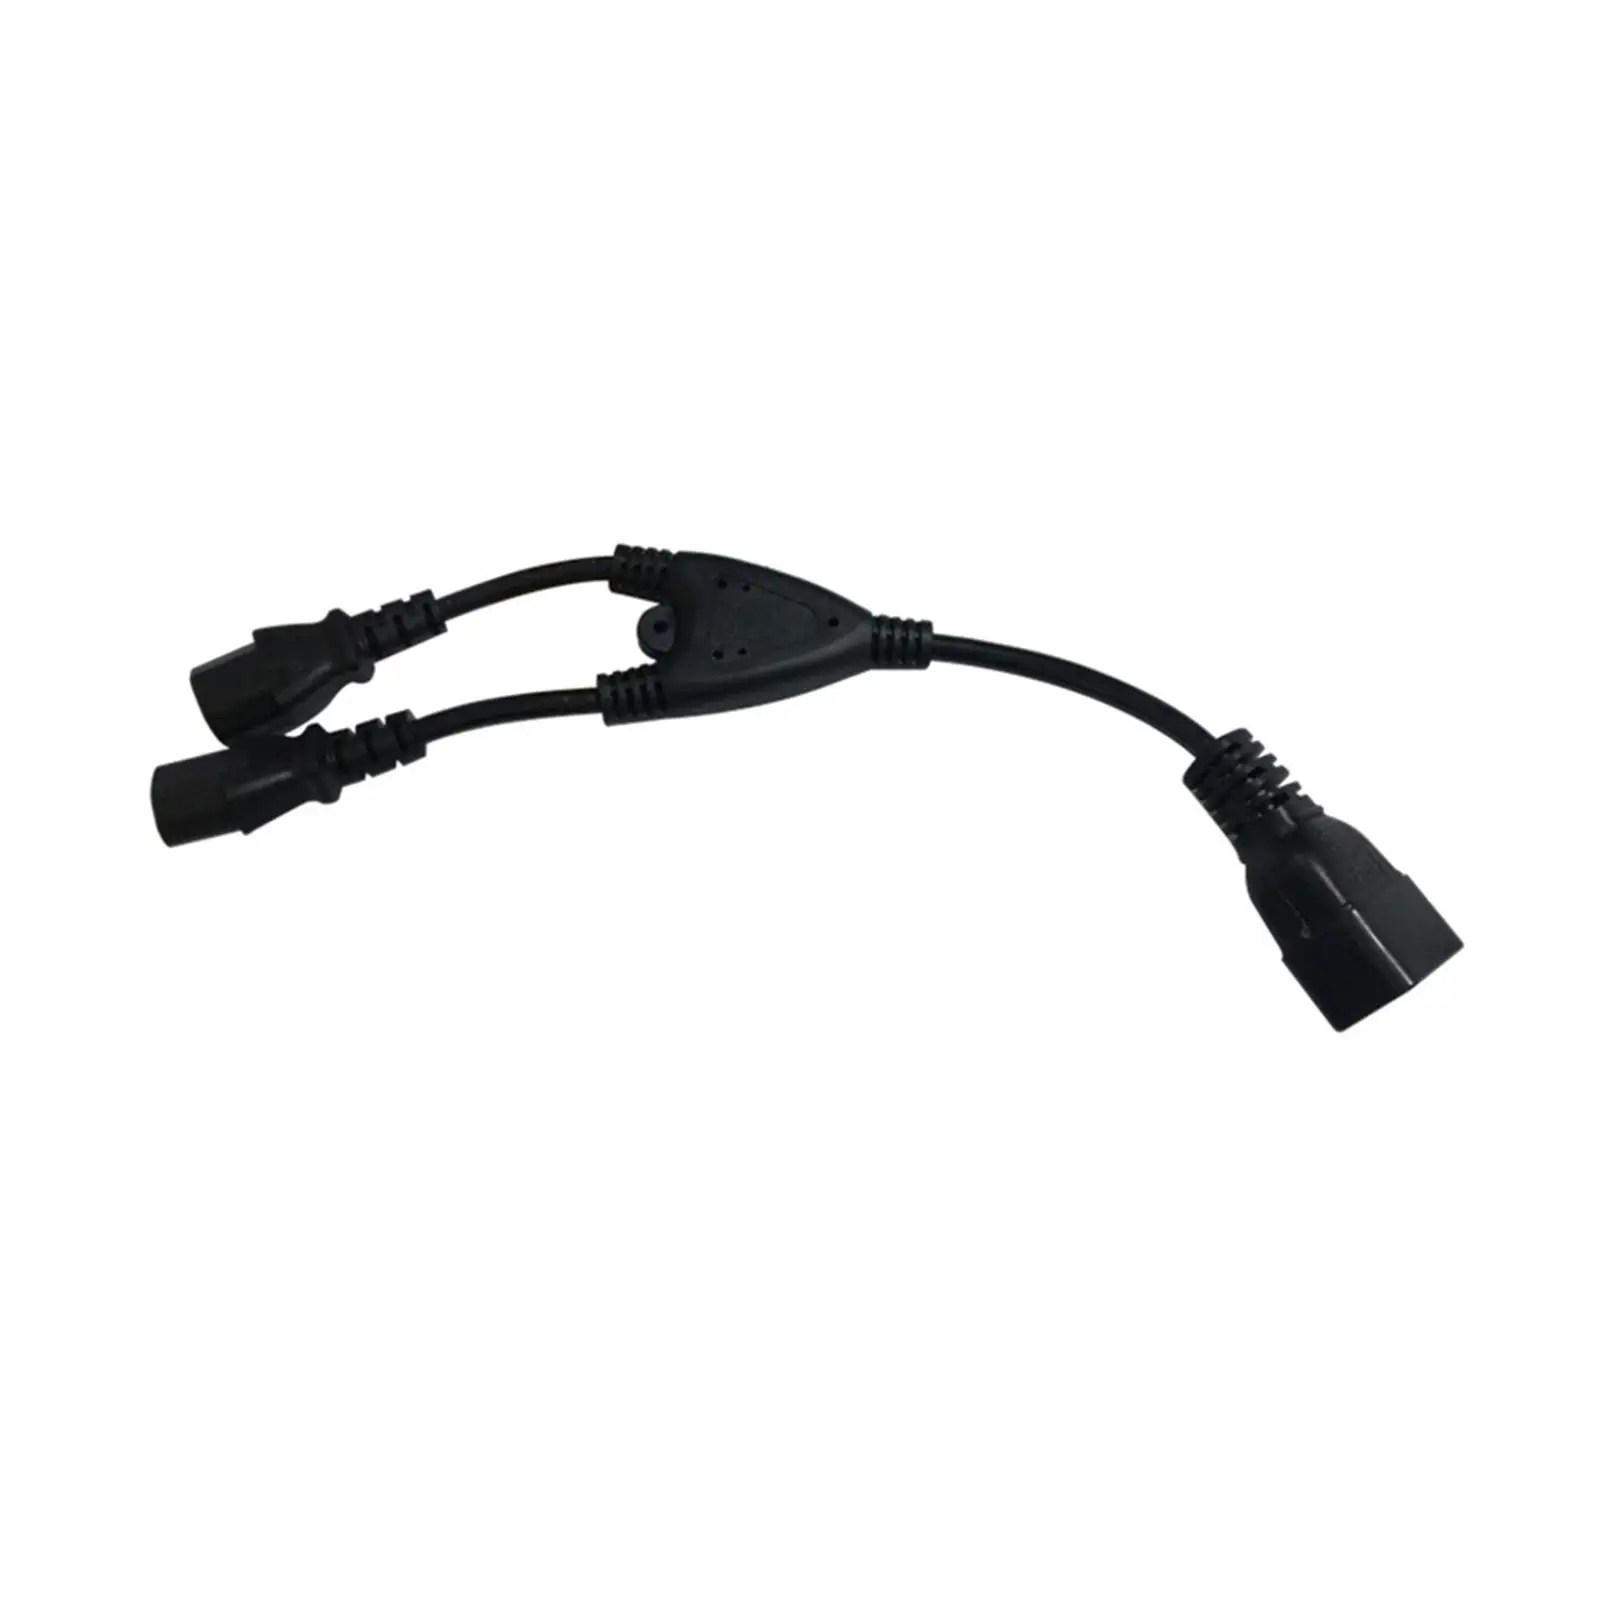 C20 to 2x C13 Y Splitter Cable 30cm Good Conductivity Low Resistance Black Power Extension Cable C13 C20 Power Cord Power Cable